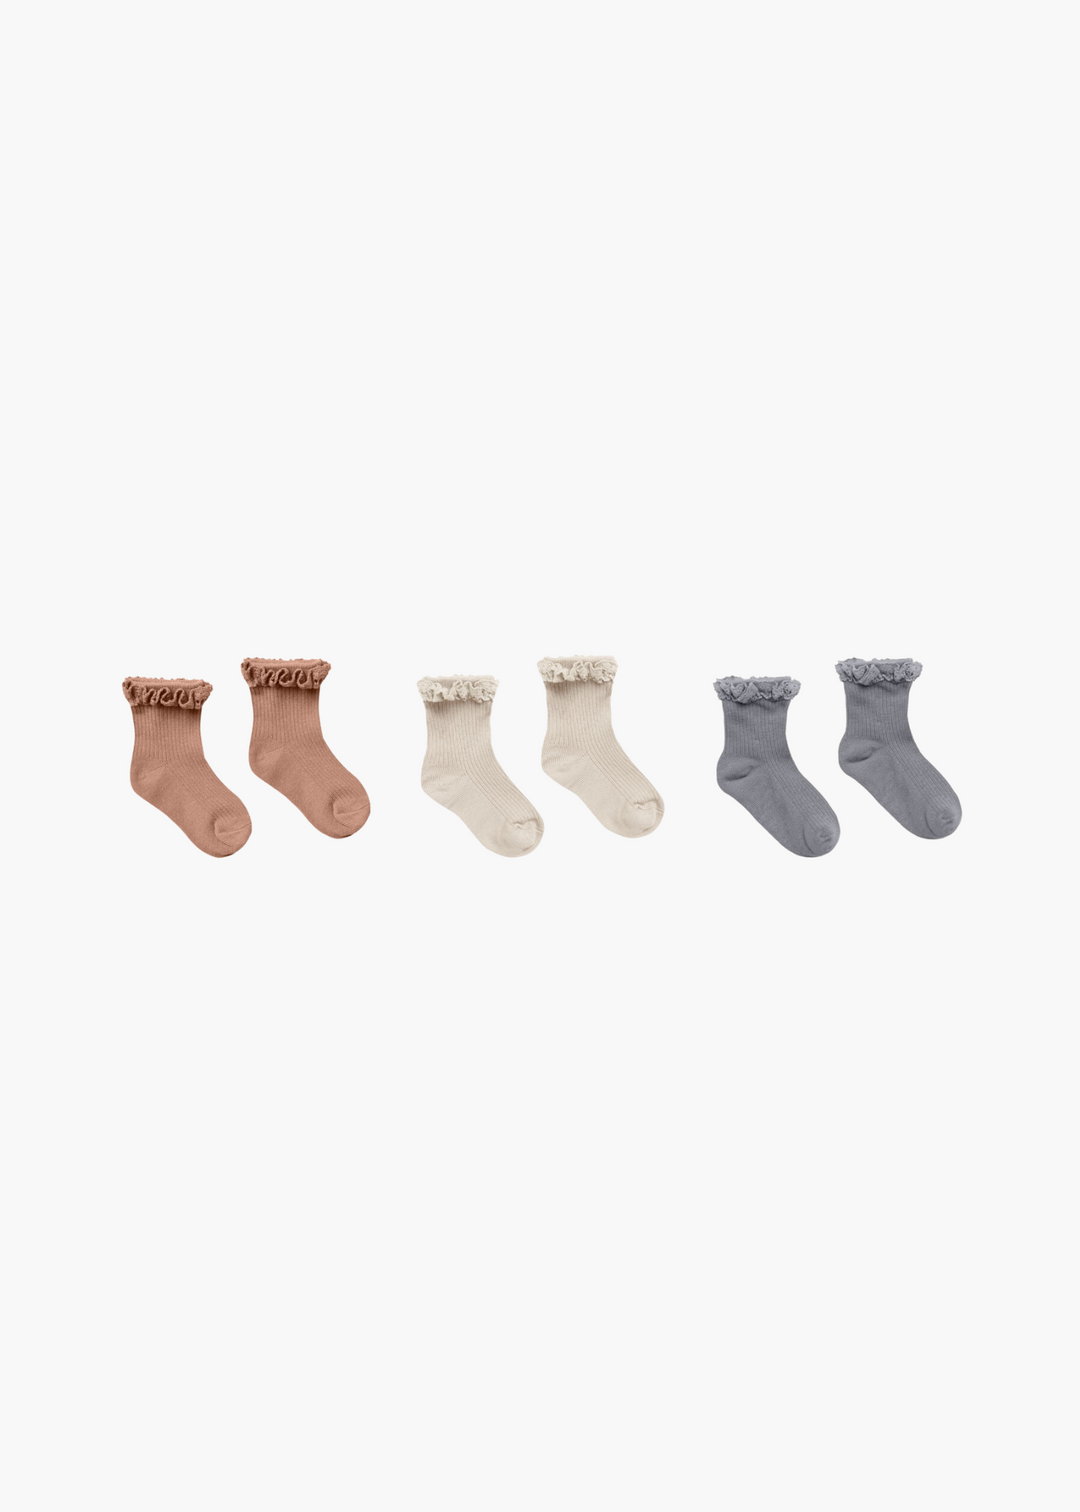 lace trim socks || spice / natural / dusty blue - FINAL SALE